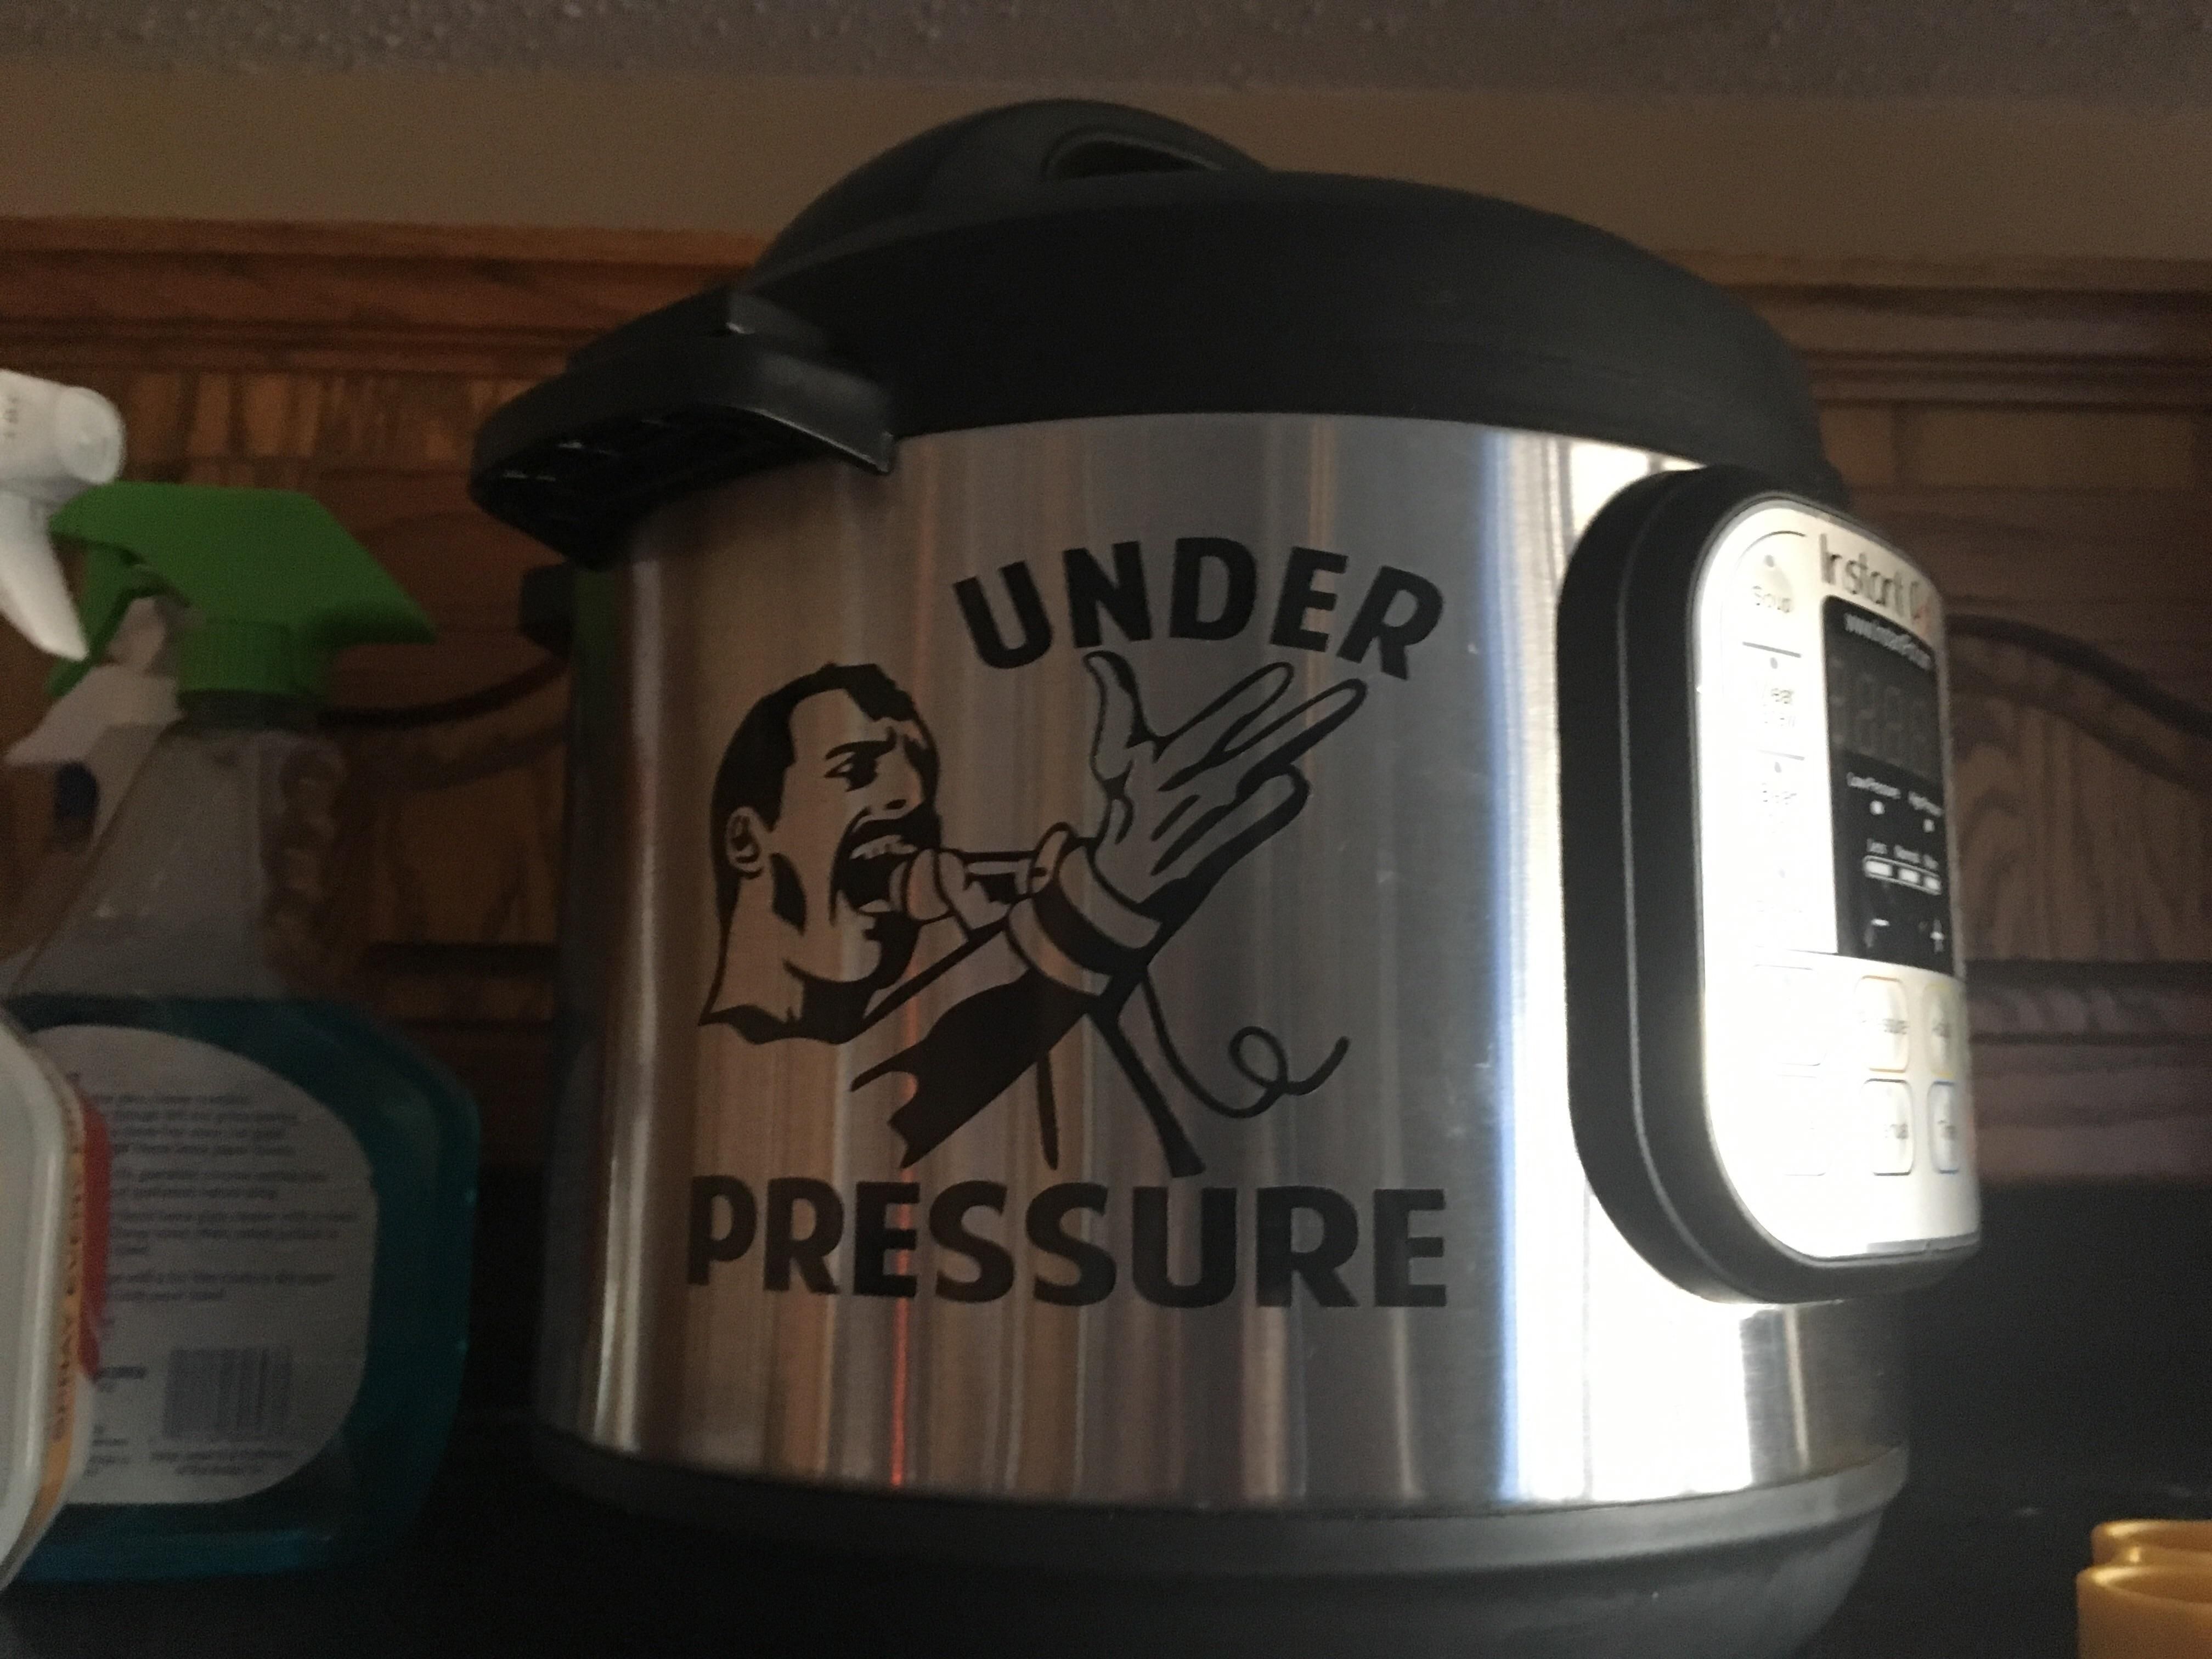 My mom’s pressure cooker